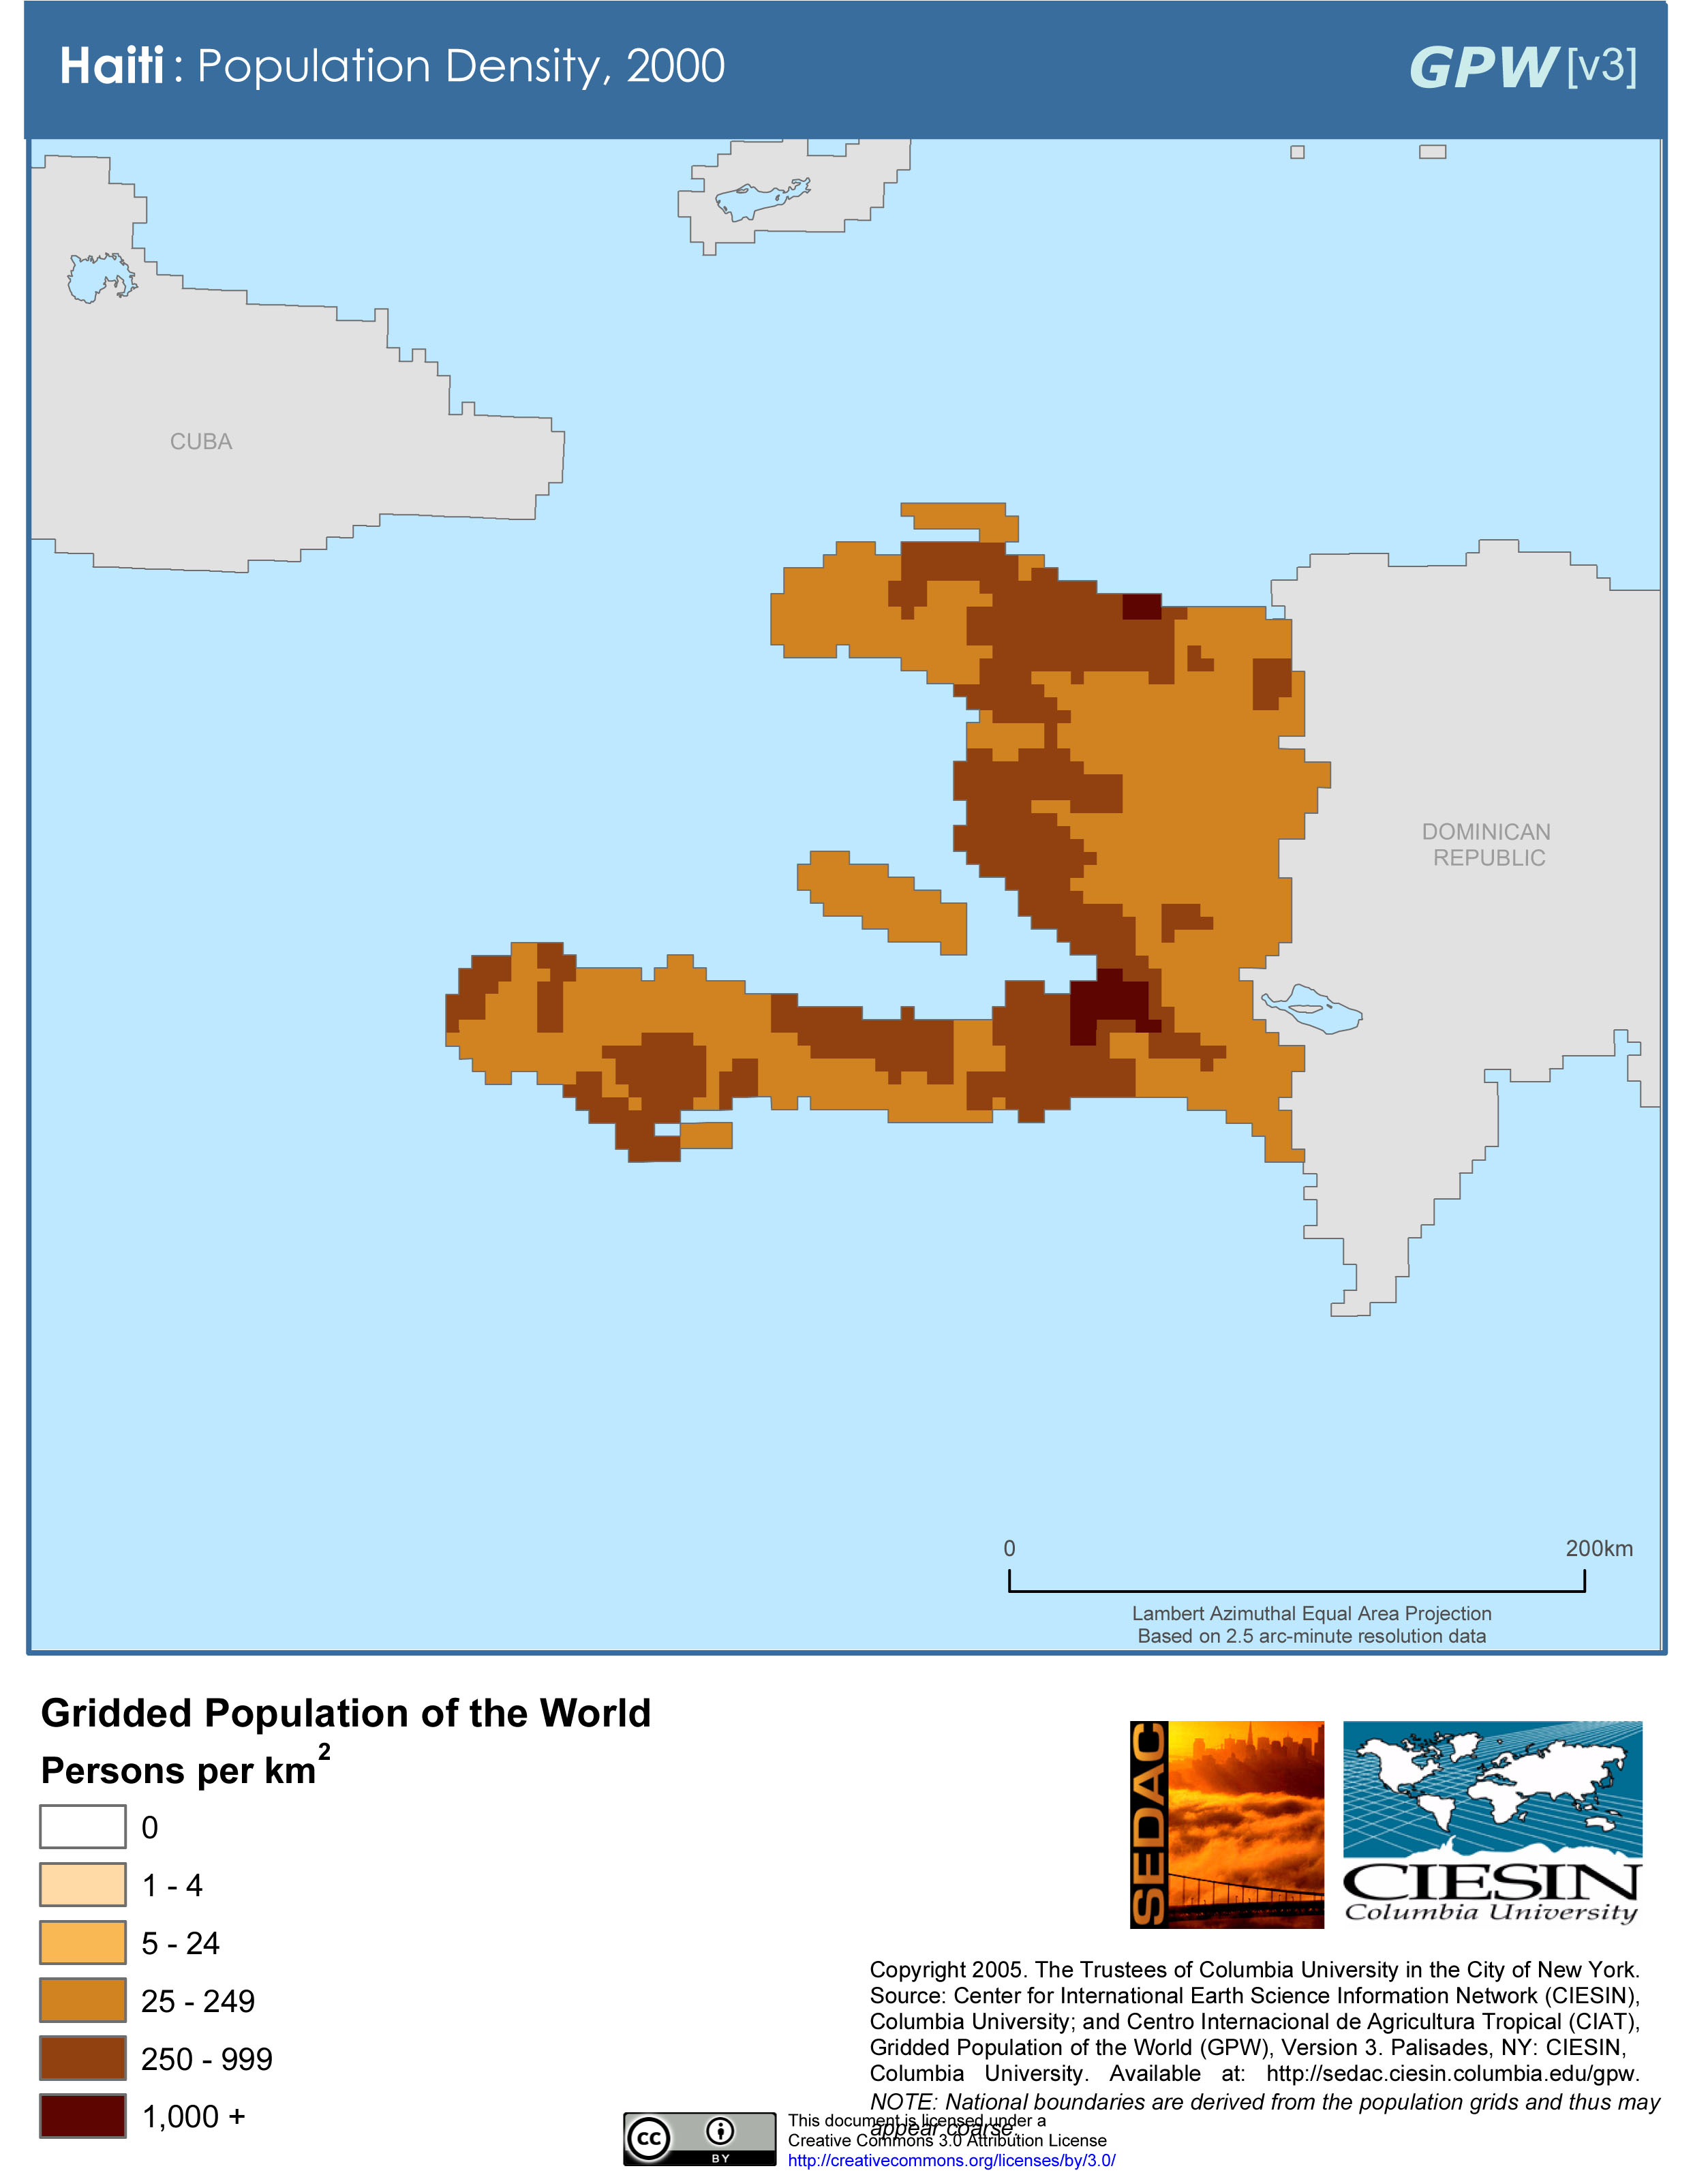 https://upload.wikimedia.org/wikipedia/commons/0/09/Haiti_Population_Density%2C_2000_%285457621182%29.jpg